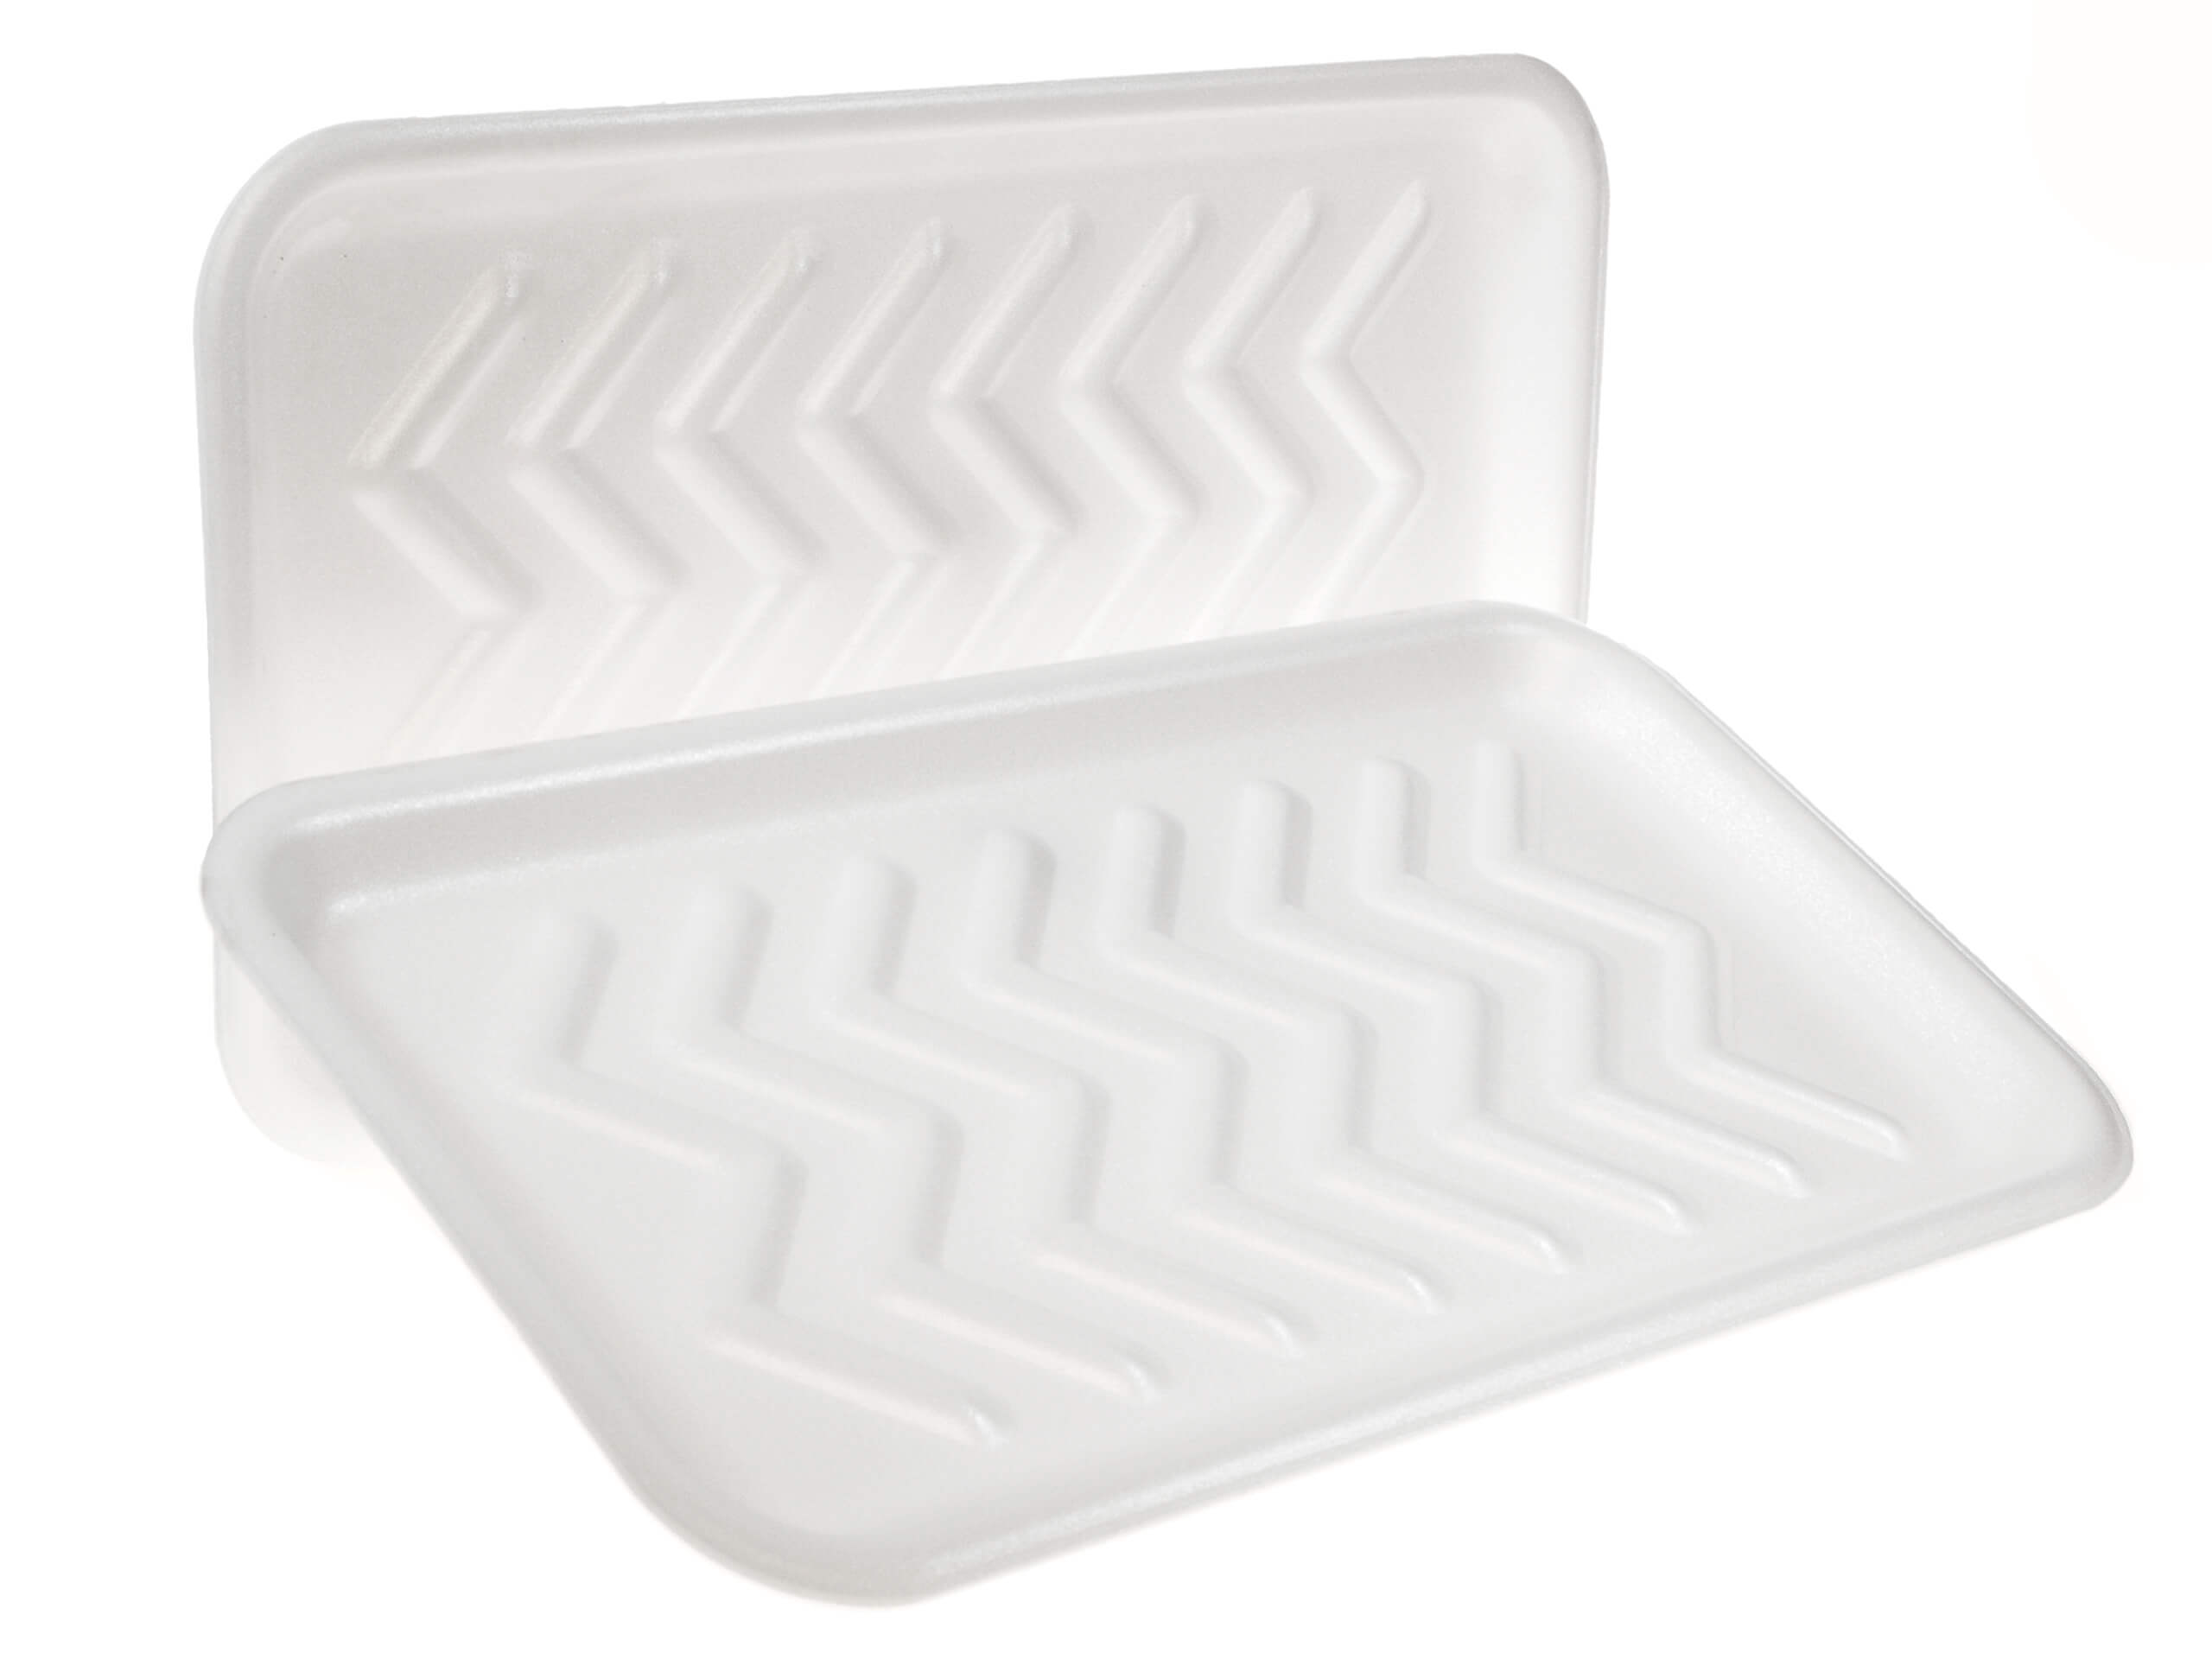 Buy Polystyrene Foam Trays in Bulk - High Quality Foodservice Trays